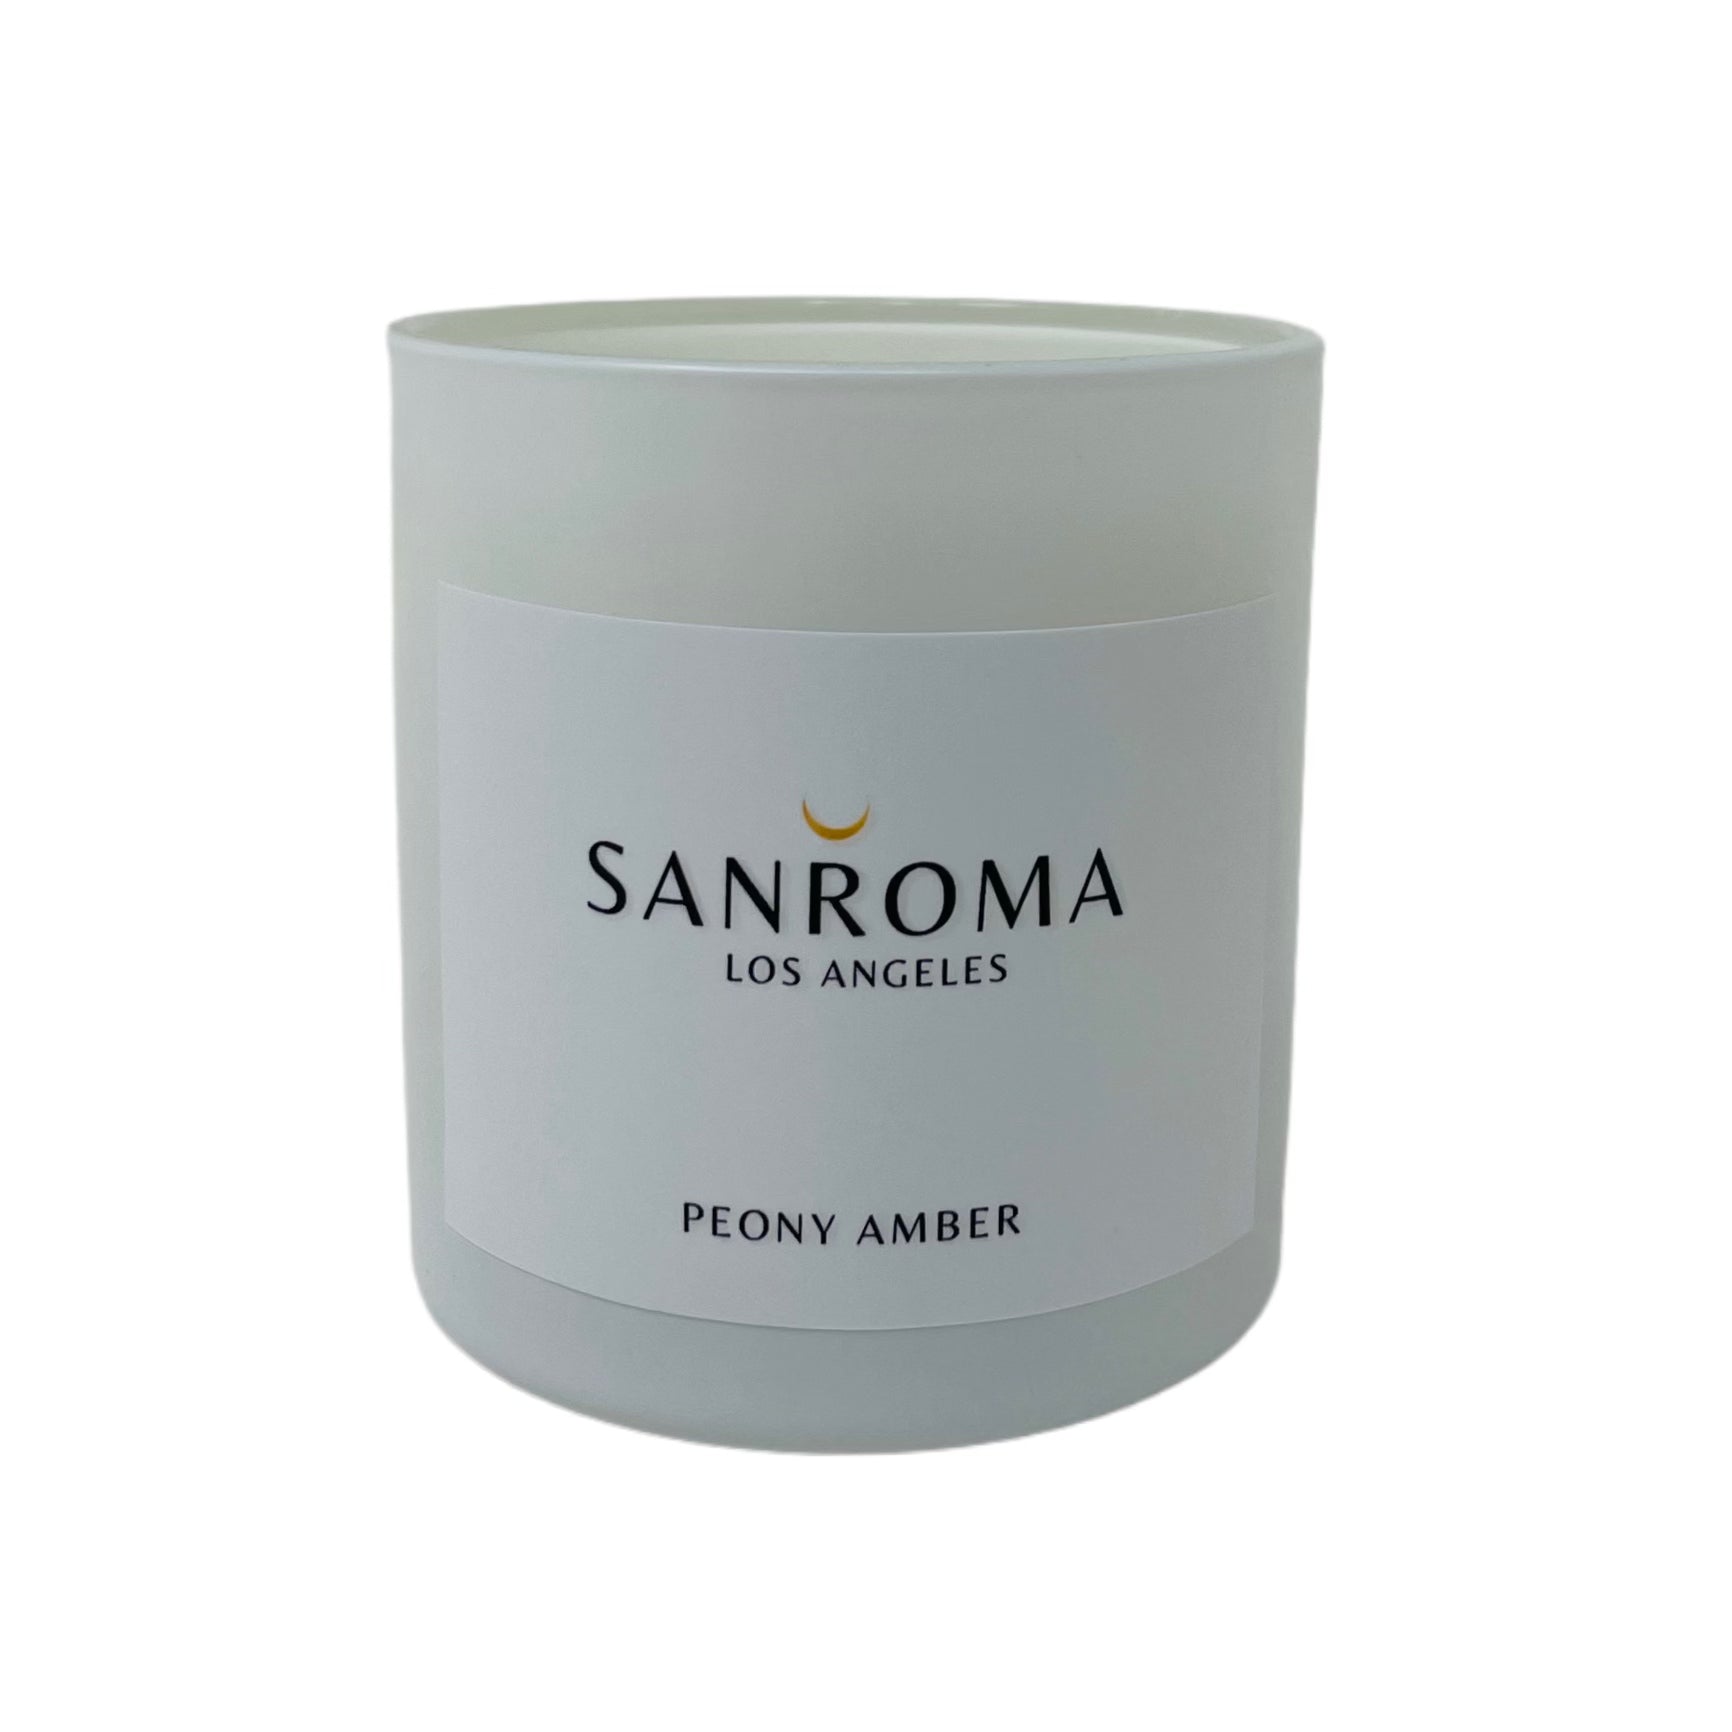 SANROMA Candle - Peony Amber